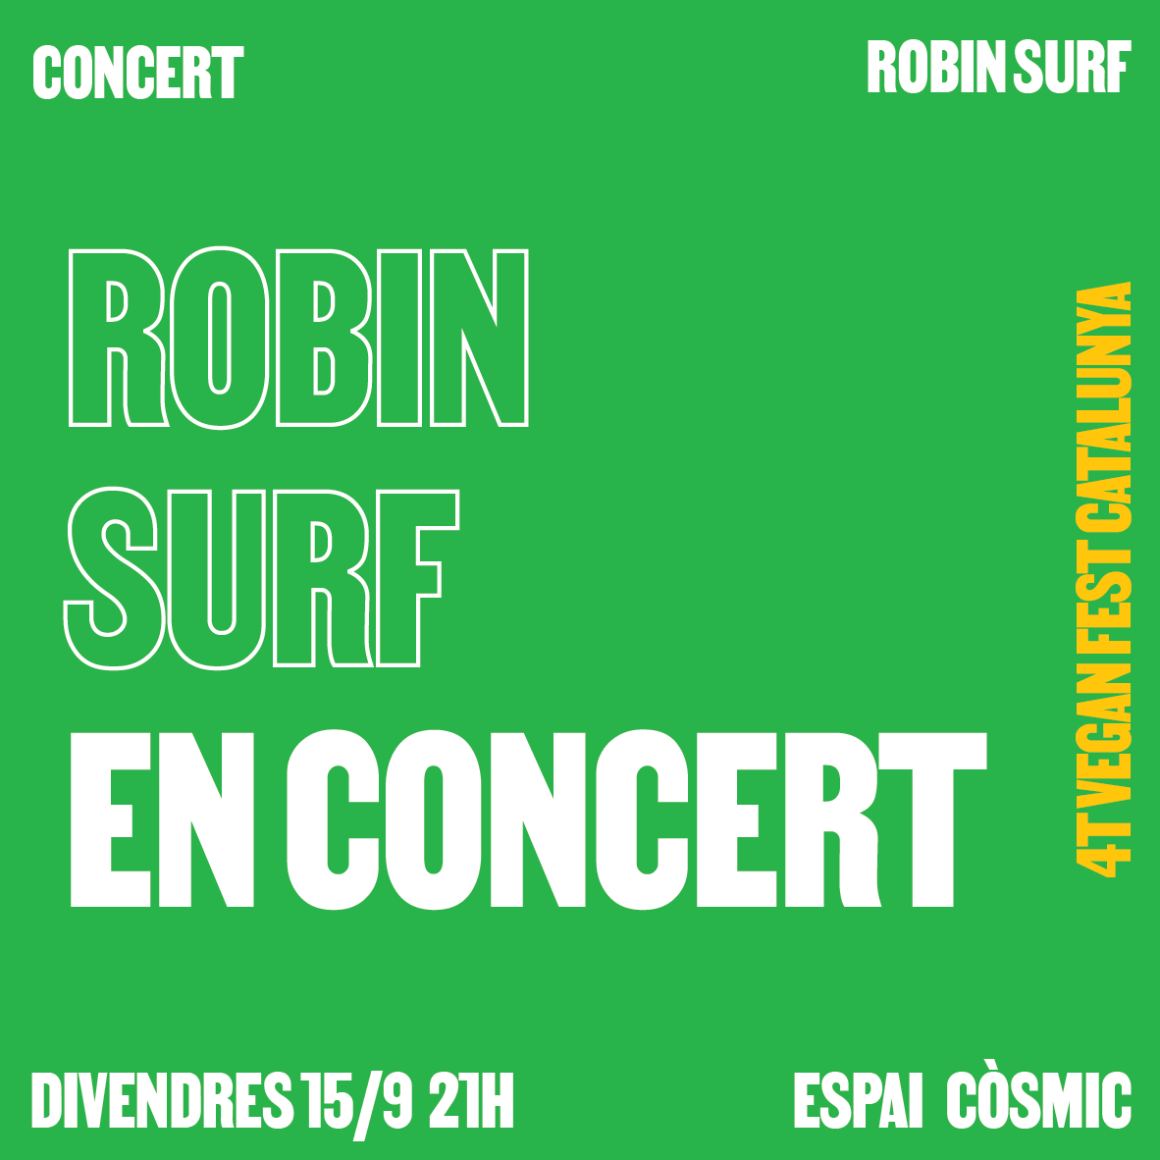 ROBIN SURF-02